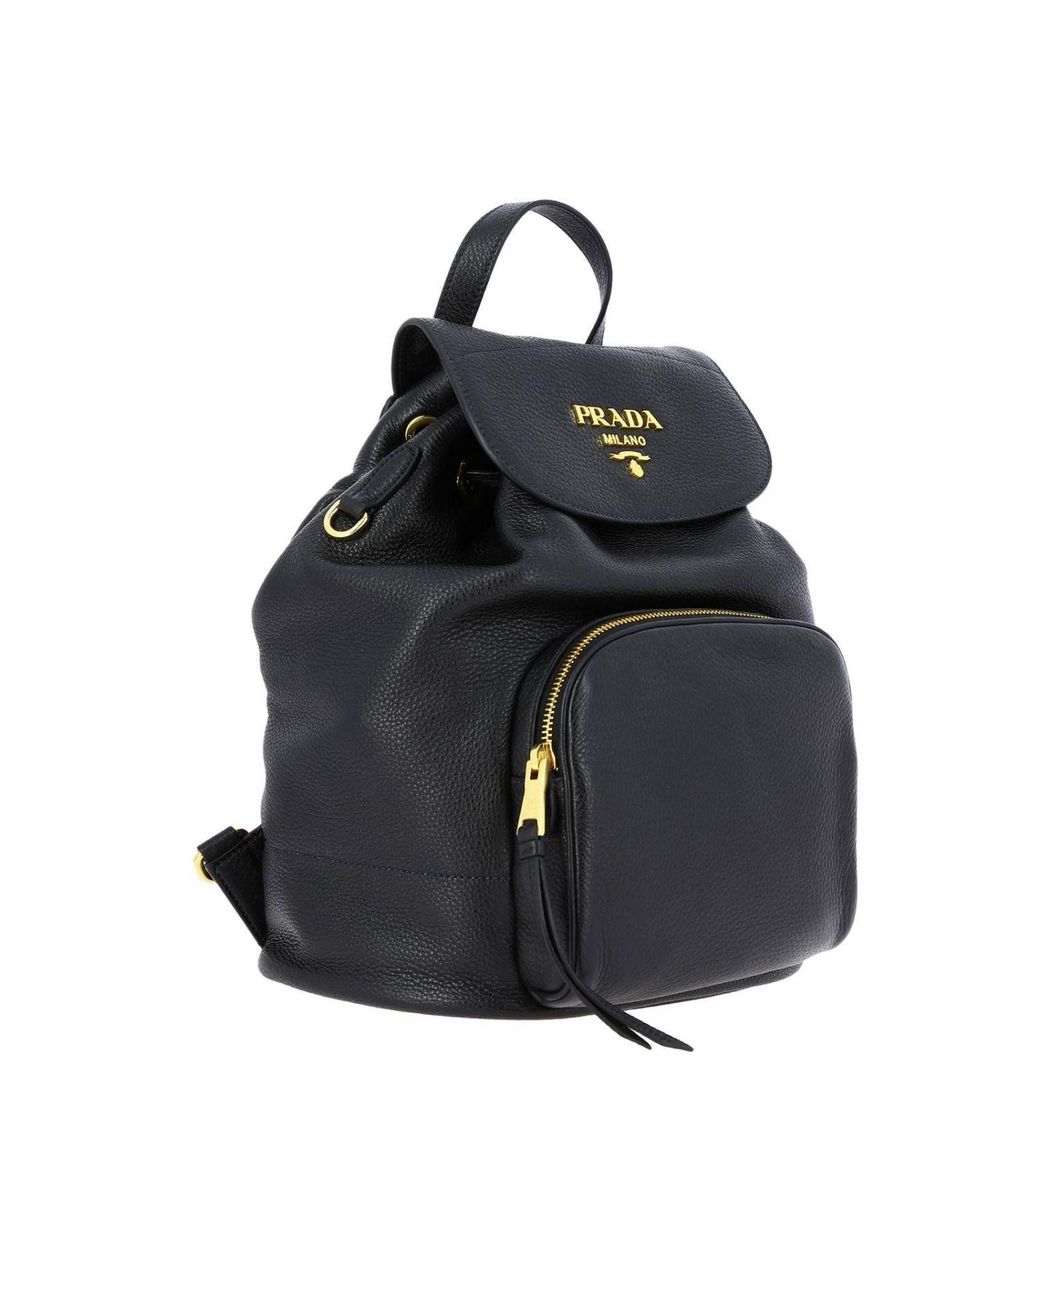 Authentic PRADA Black Nylon and Leather Backpack Bag Purse #55055 | eBay